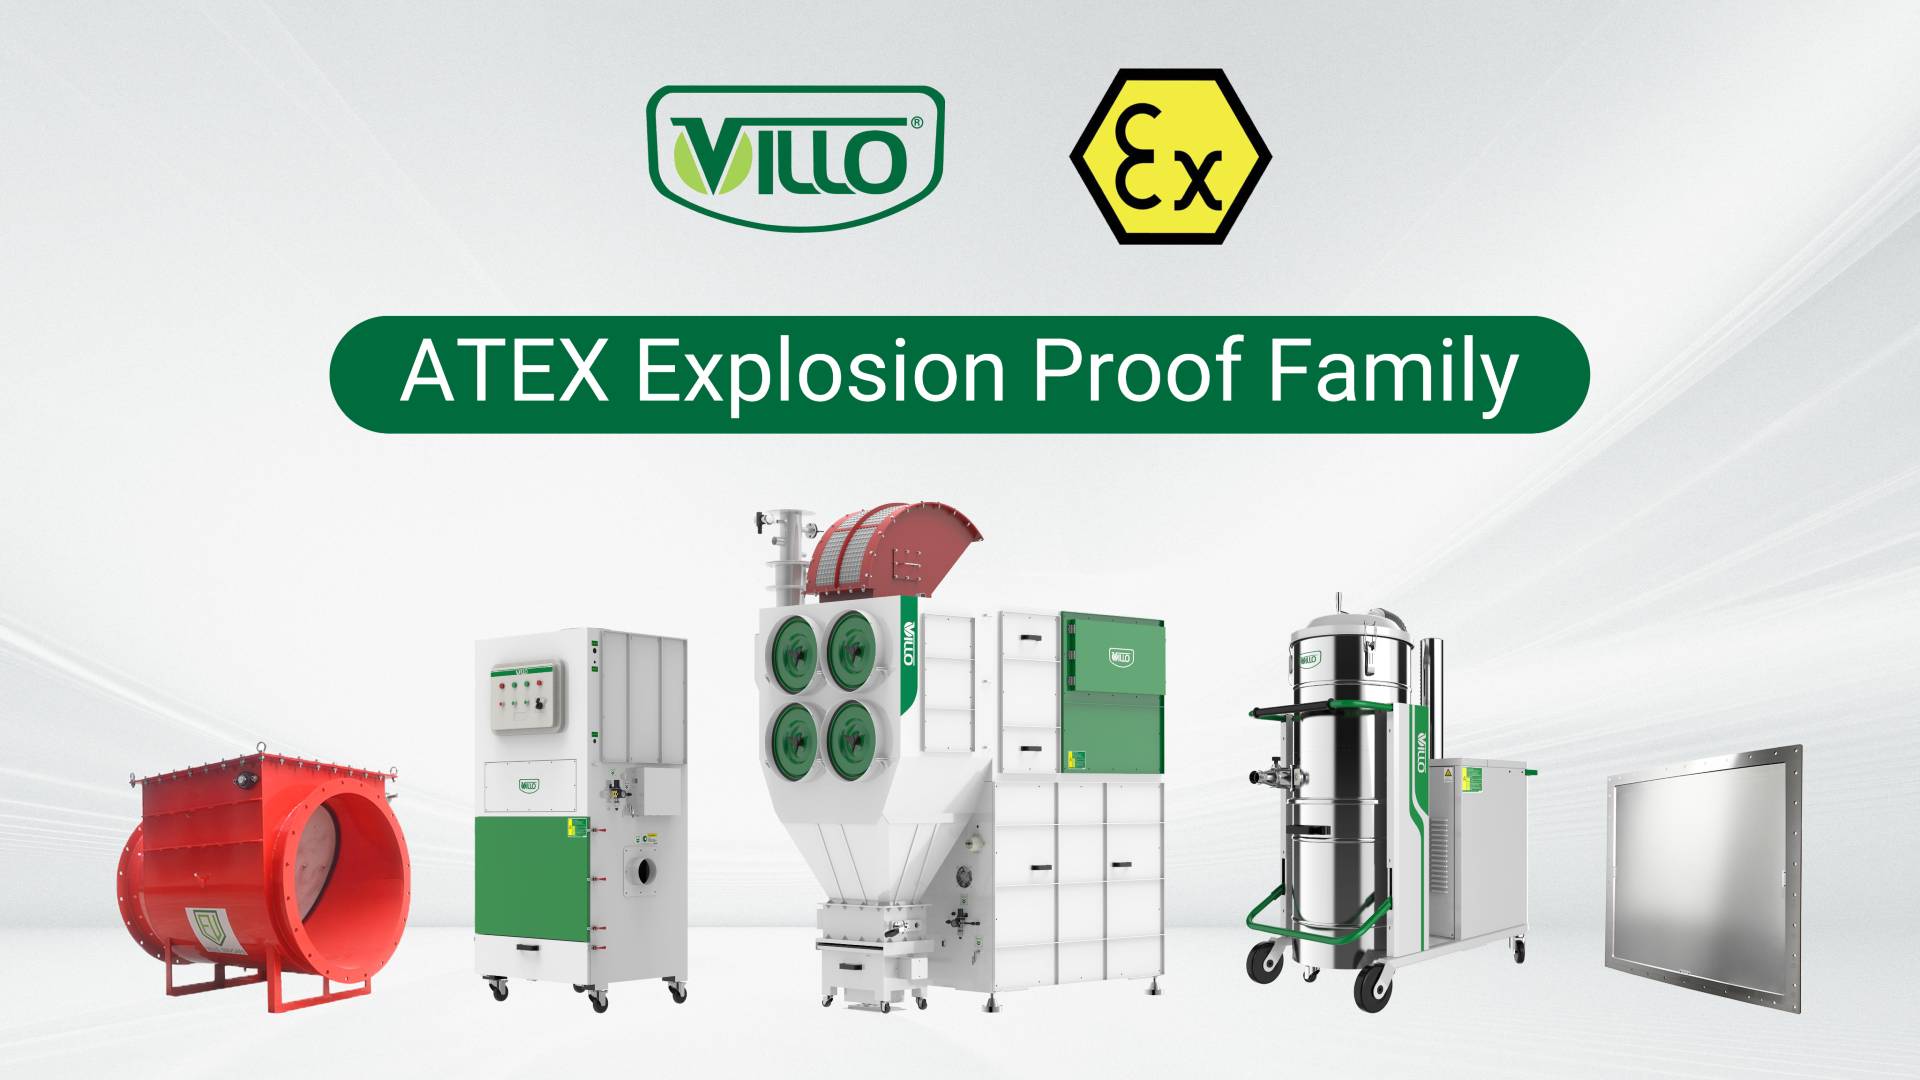 Villo, VJFHB 집진기로 ATEX 인증 라인 확장